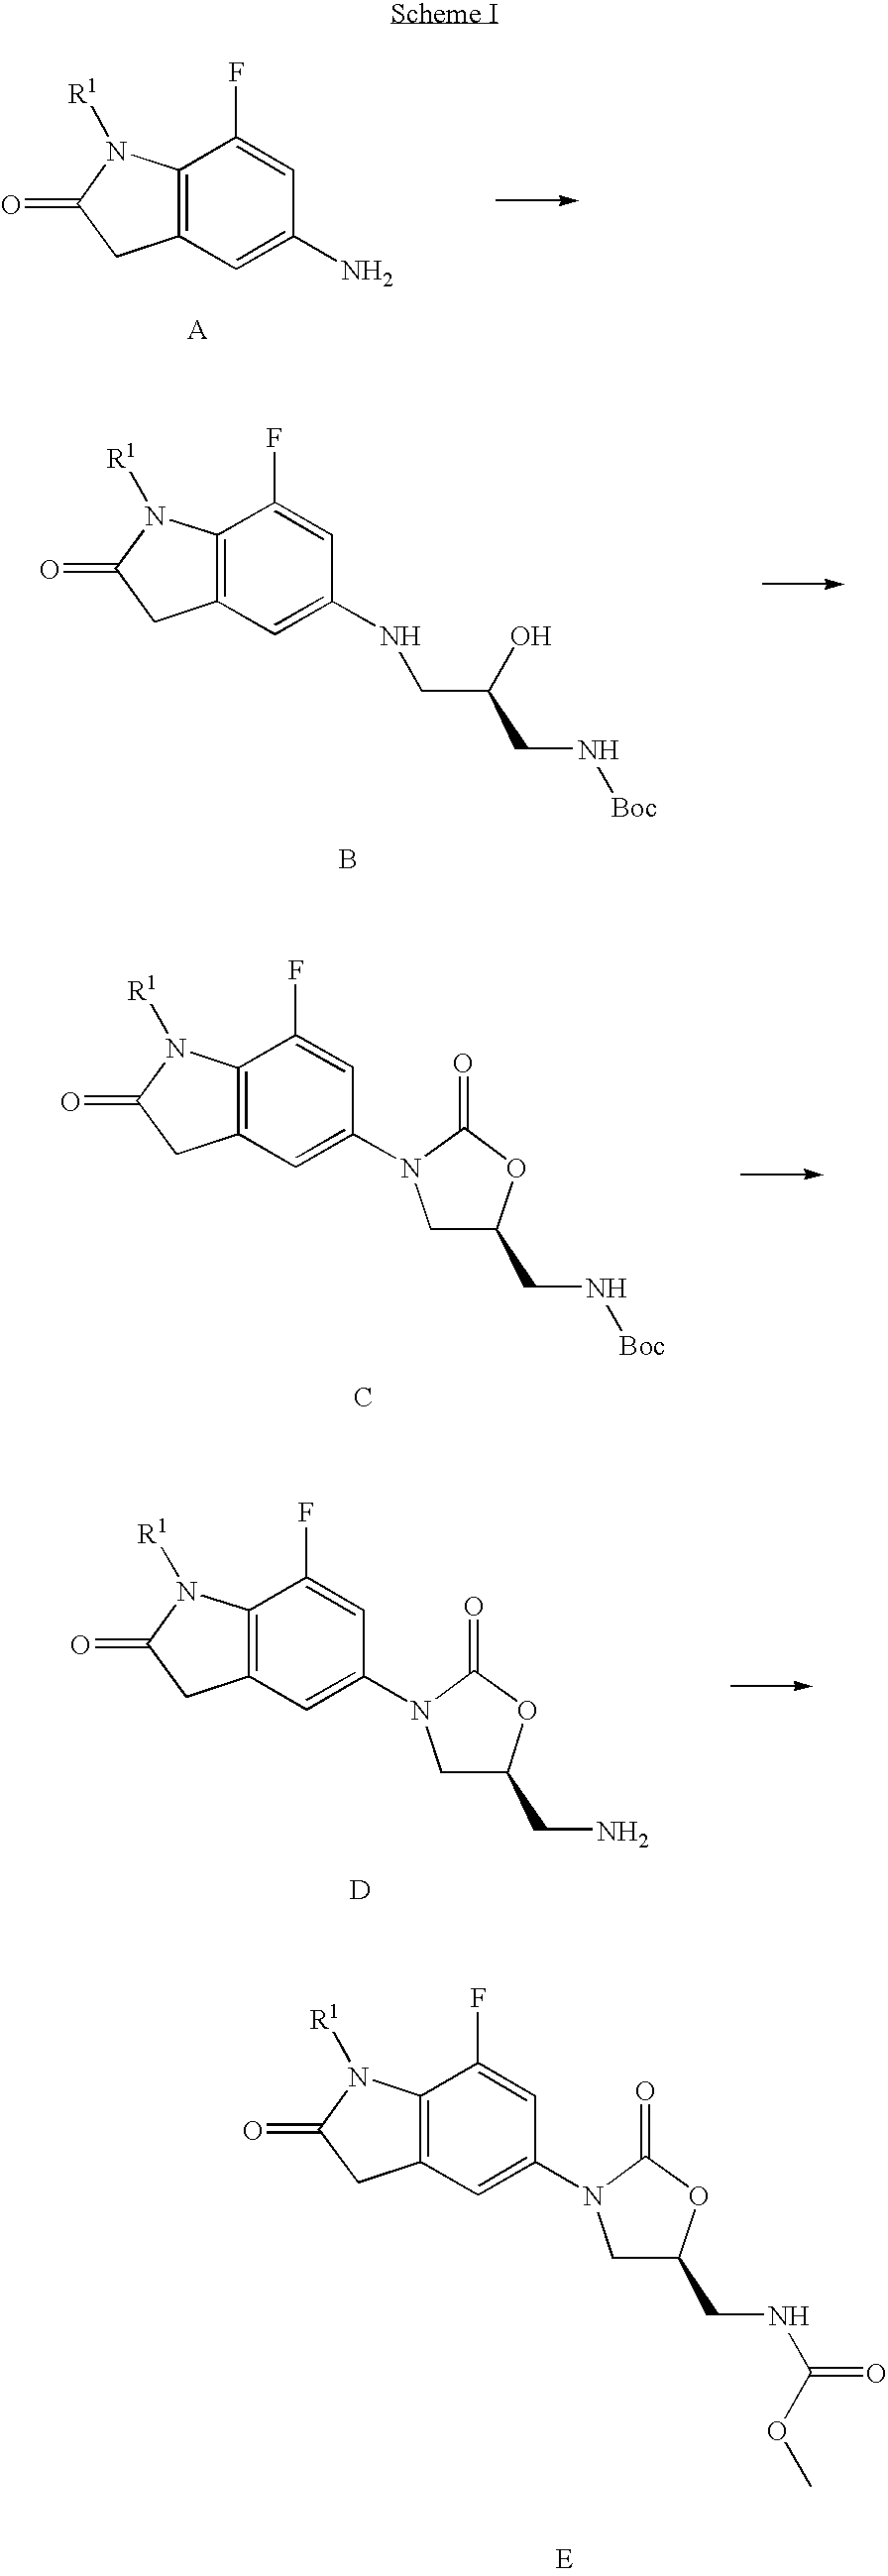 7-Fluoro-1,3-dihydro-indol-2-one oxazolidinones as antibacterial agents